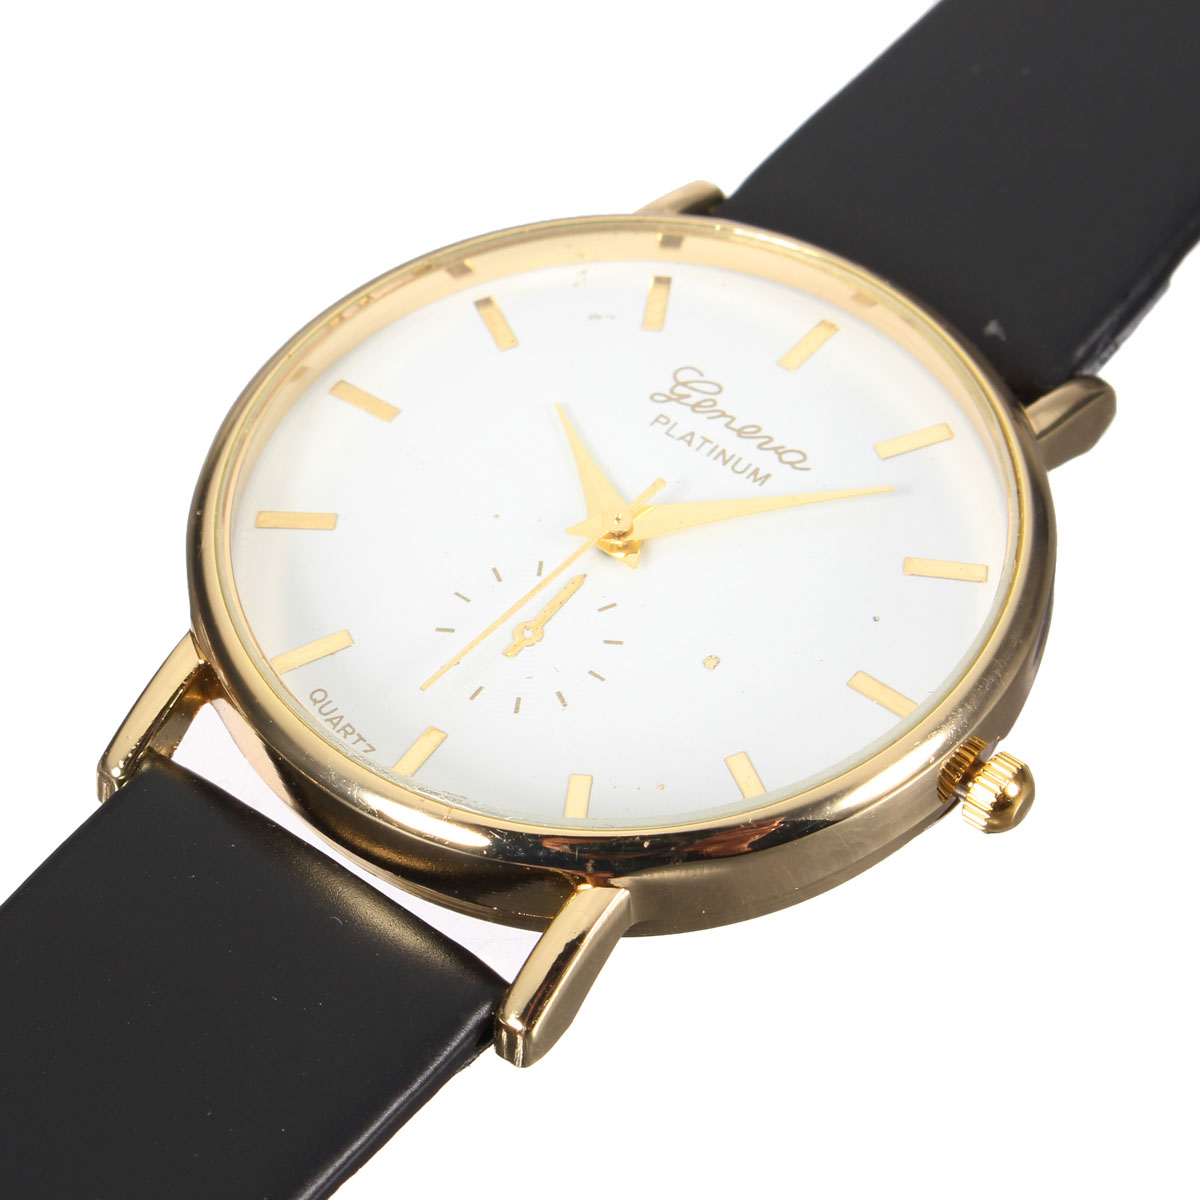 Casual-Simple-Face-Gold-Case-PU-Leather-Men-Women-Wrist-Watch-984243